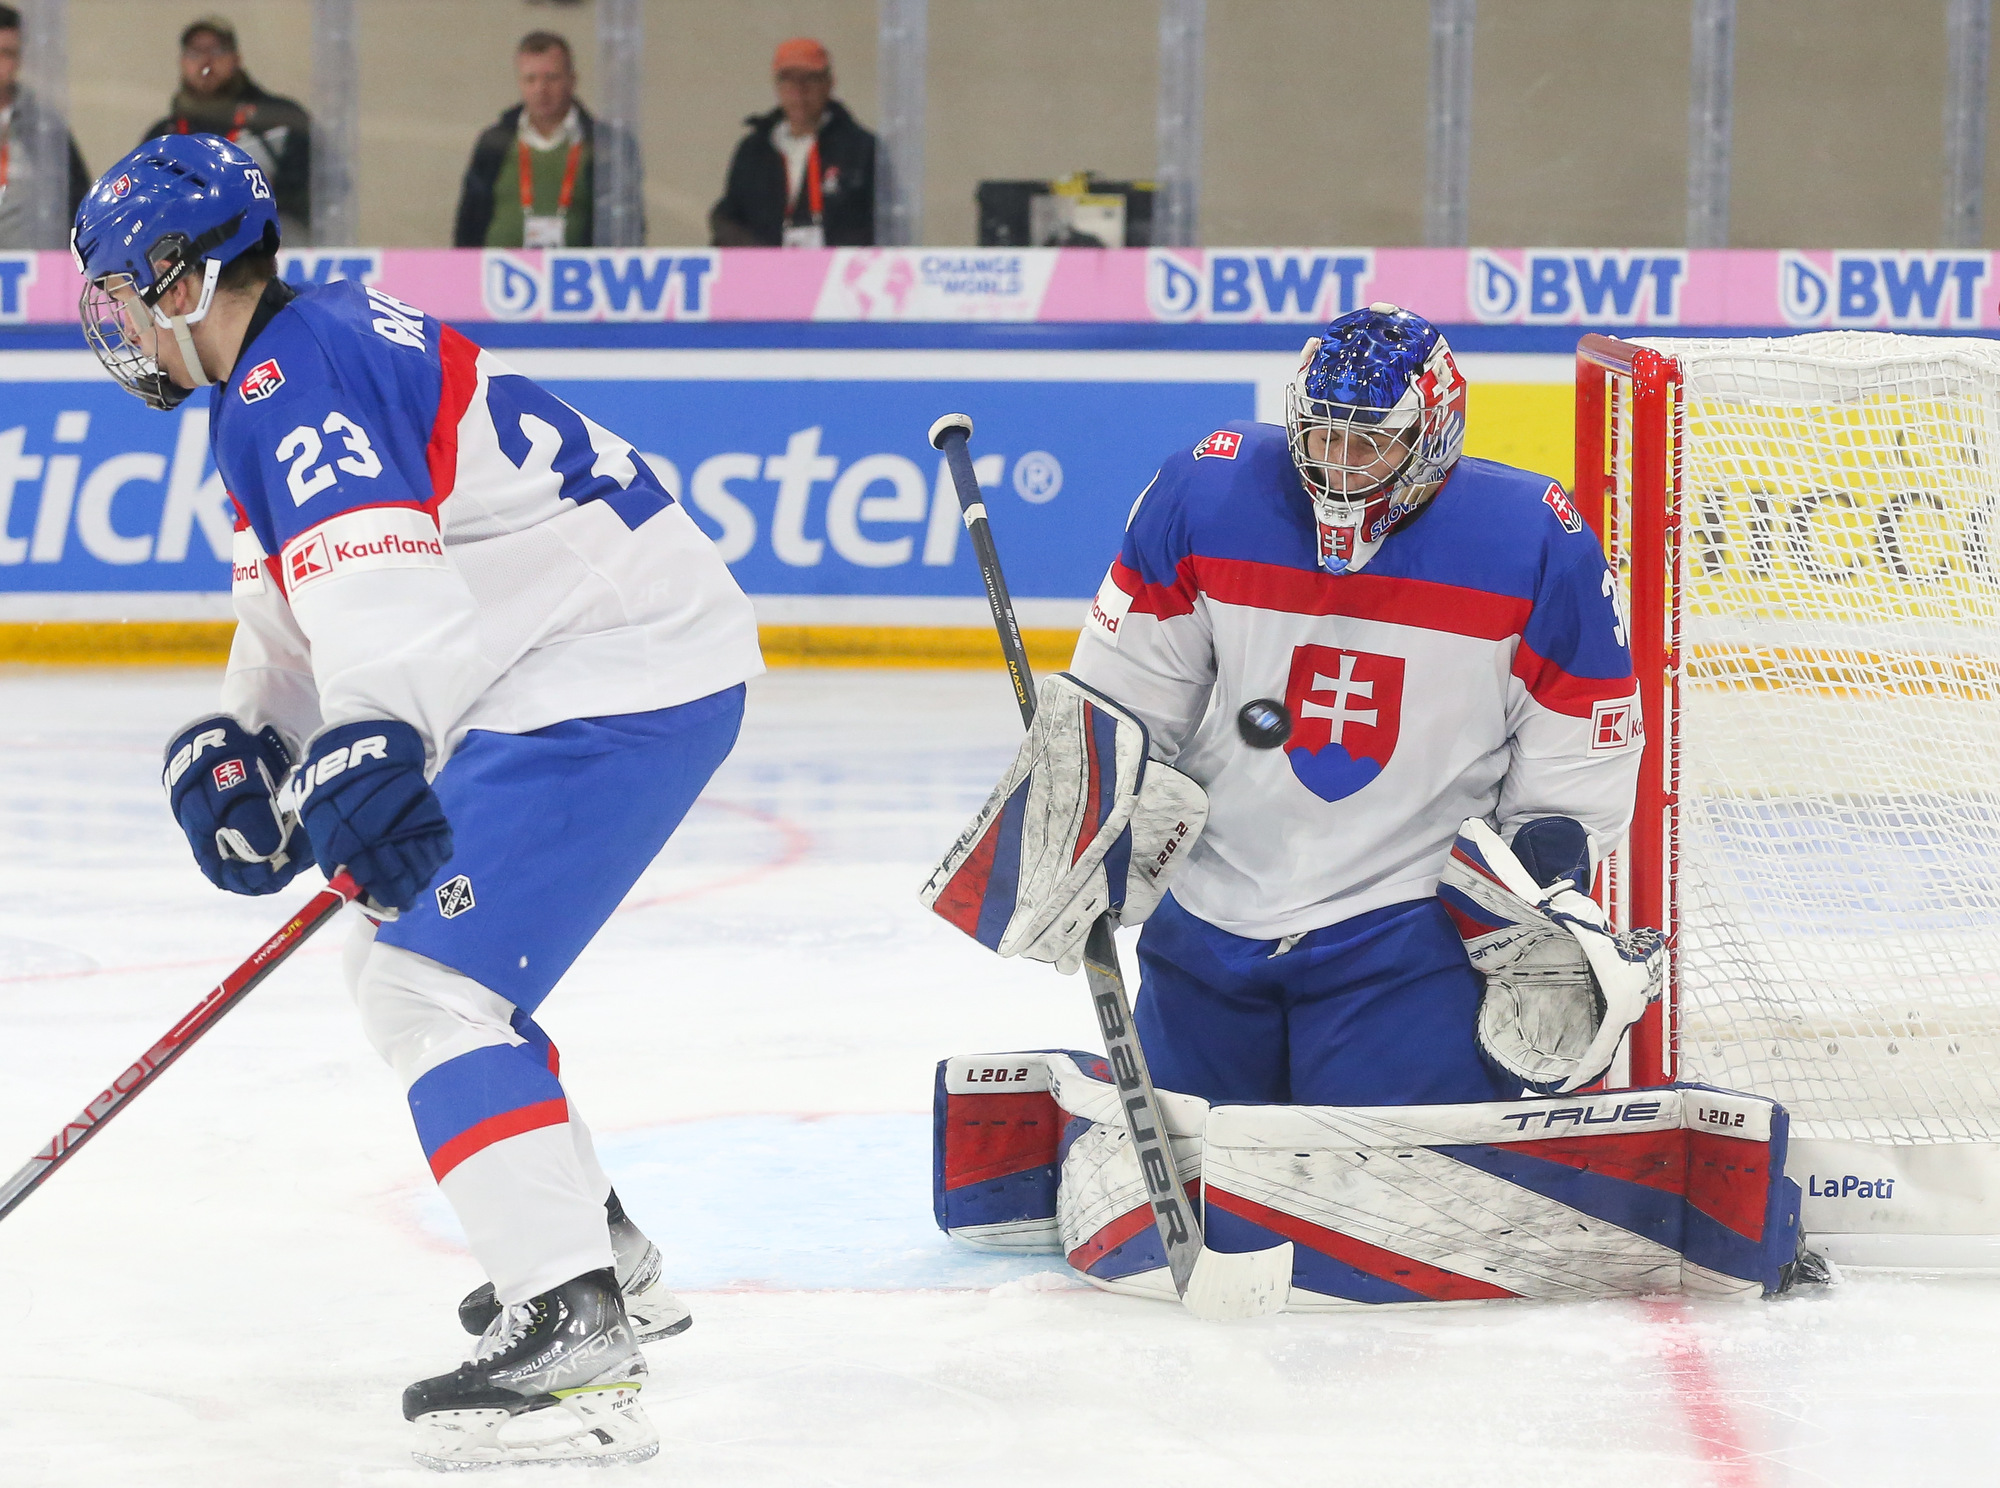 Germany vs Slovakia - 2023 IIHF Ice Hockey U18 World Championship